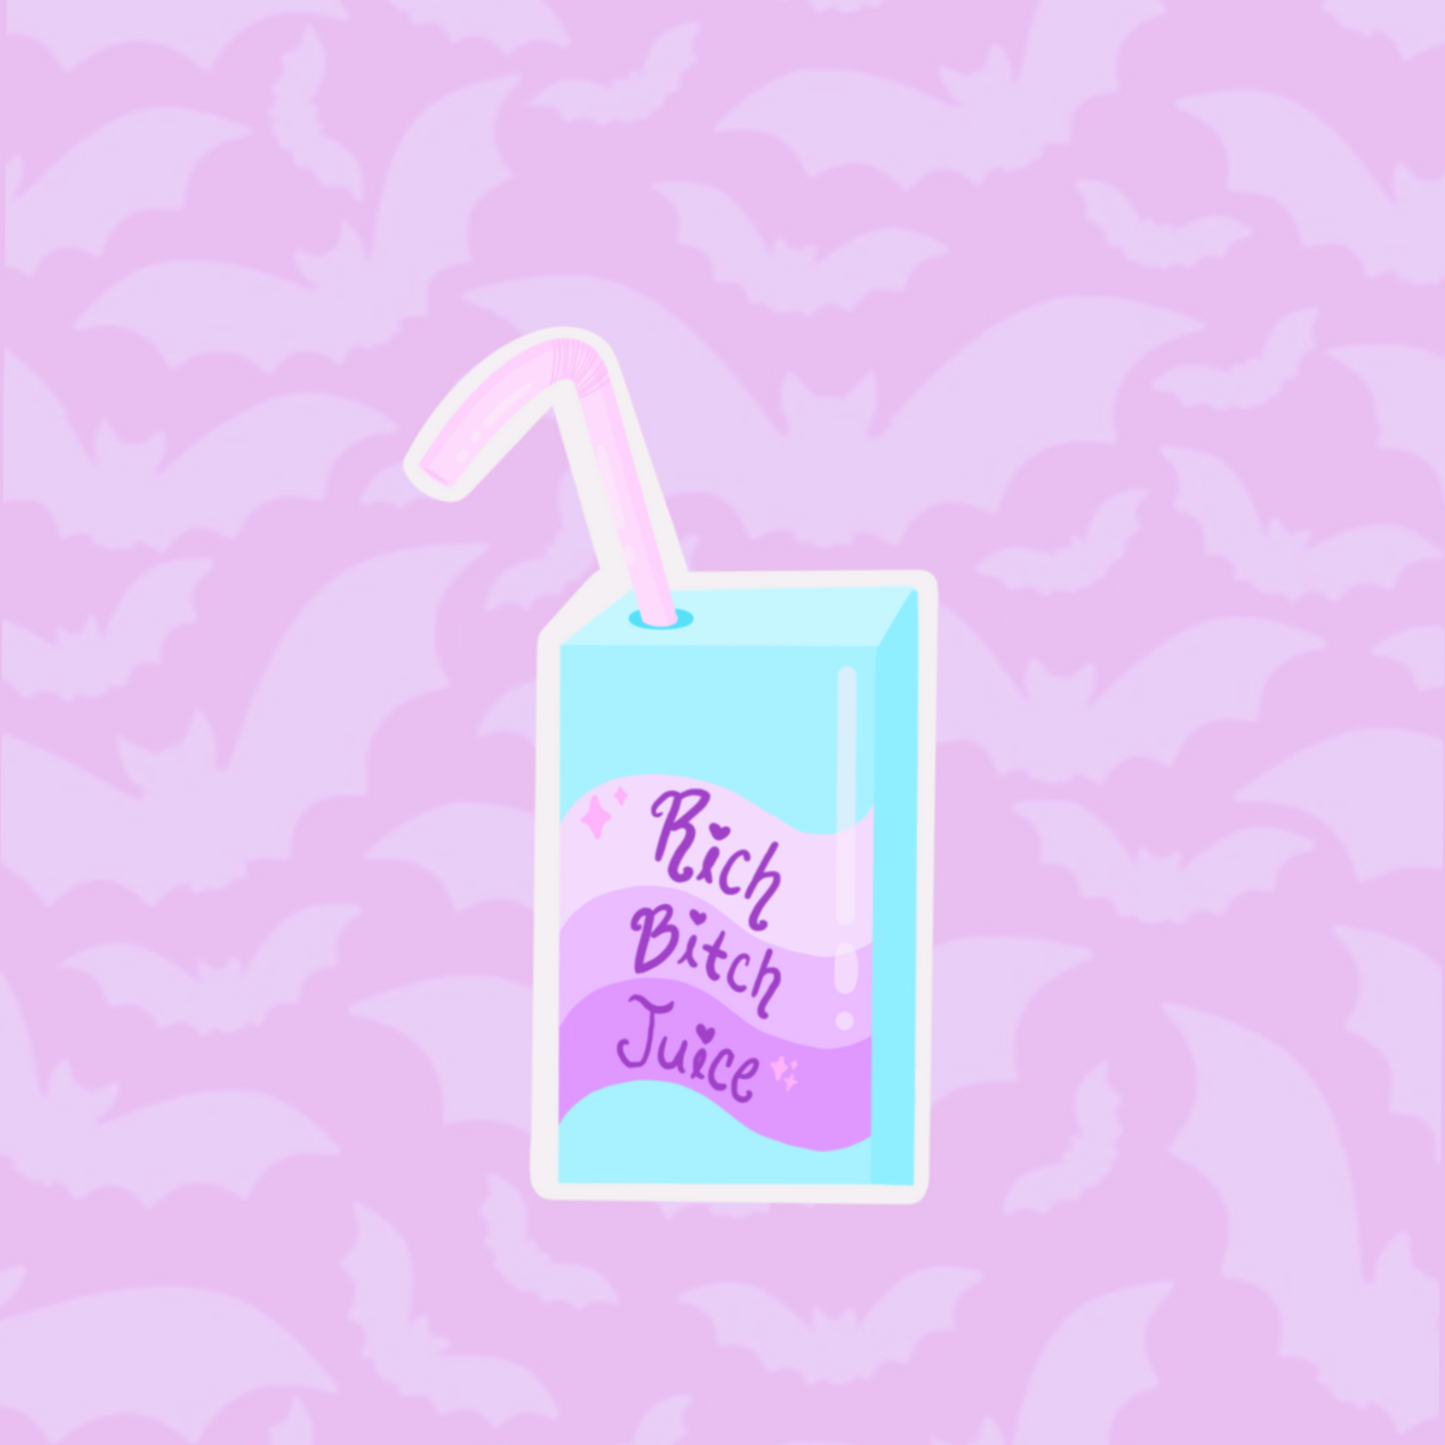 Retired design- Rich / Dumb B juice stickers